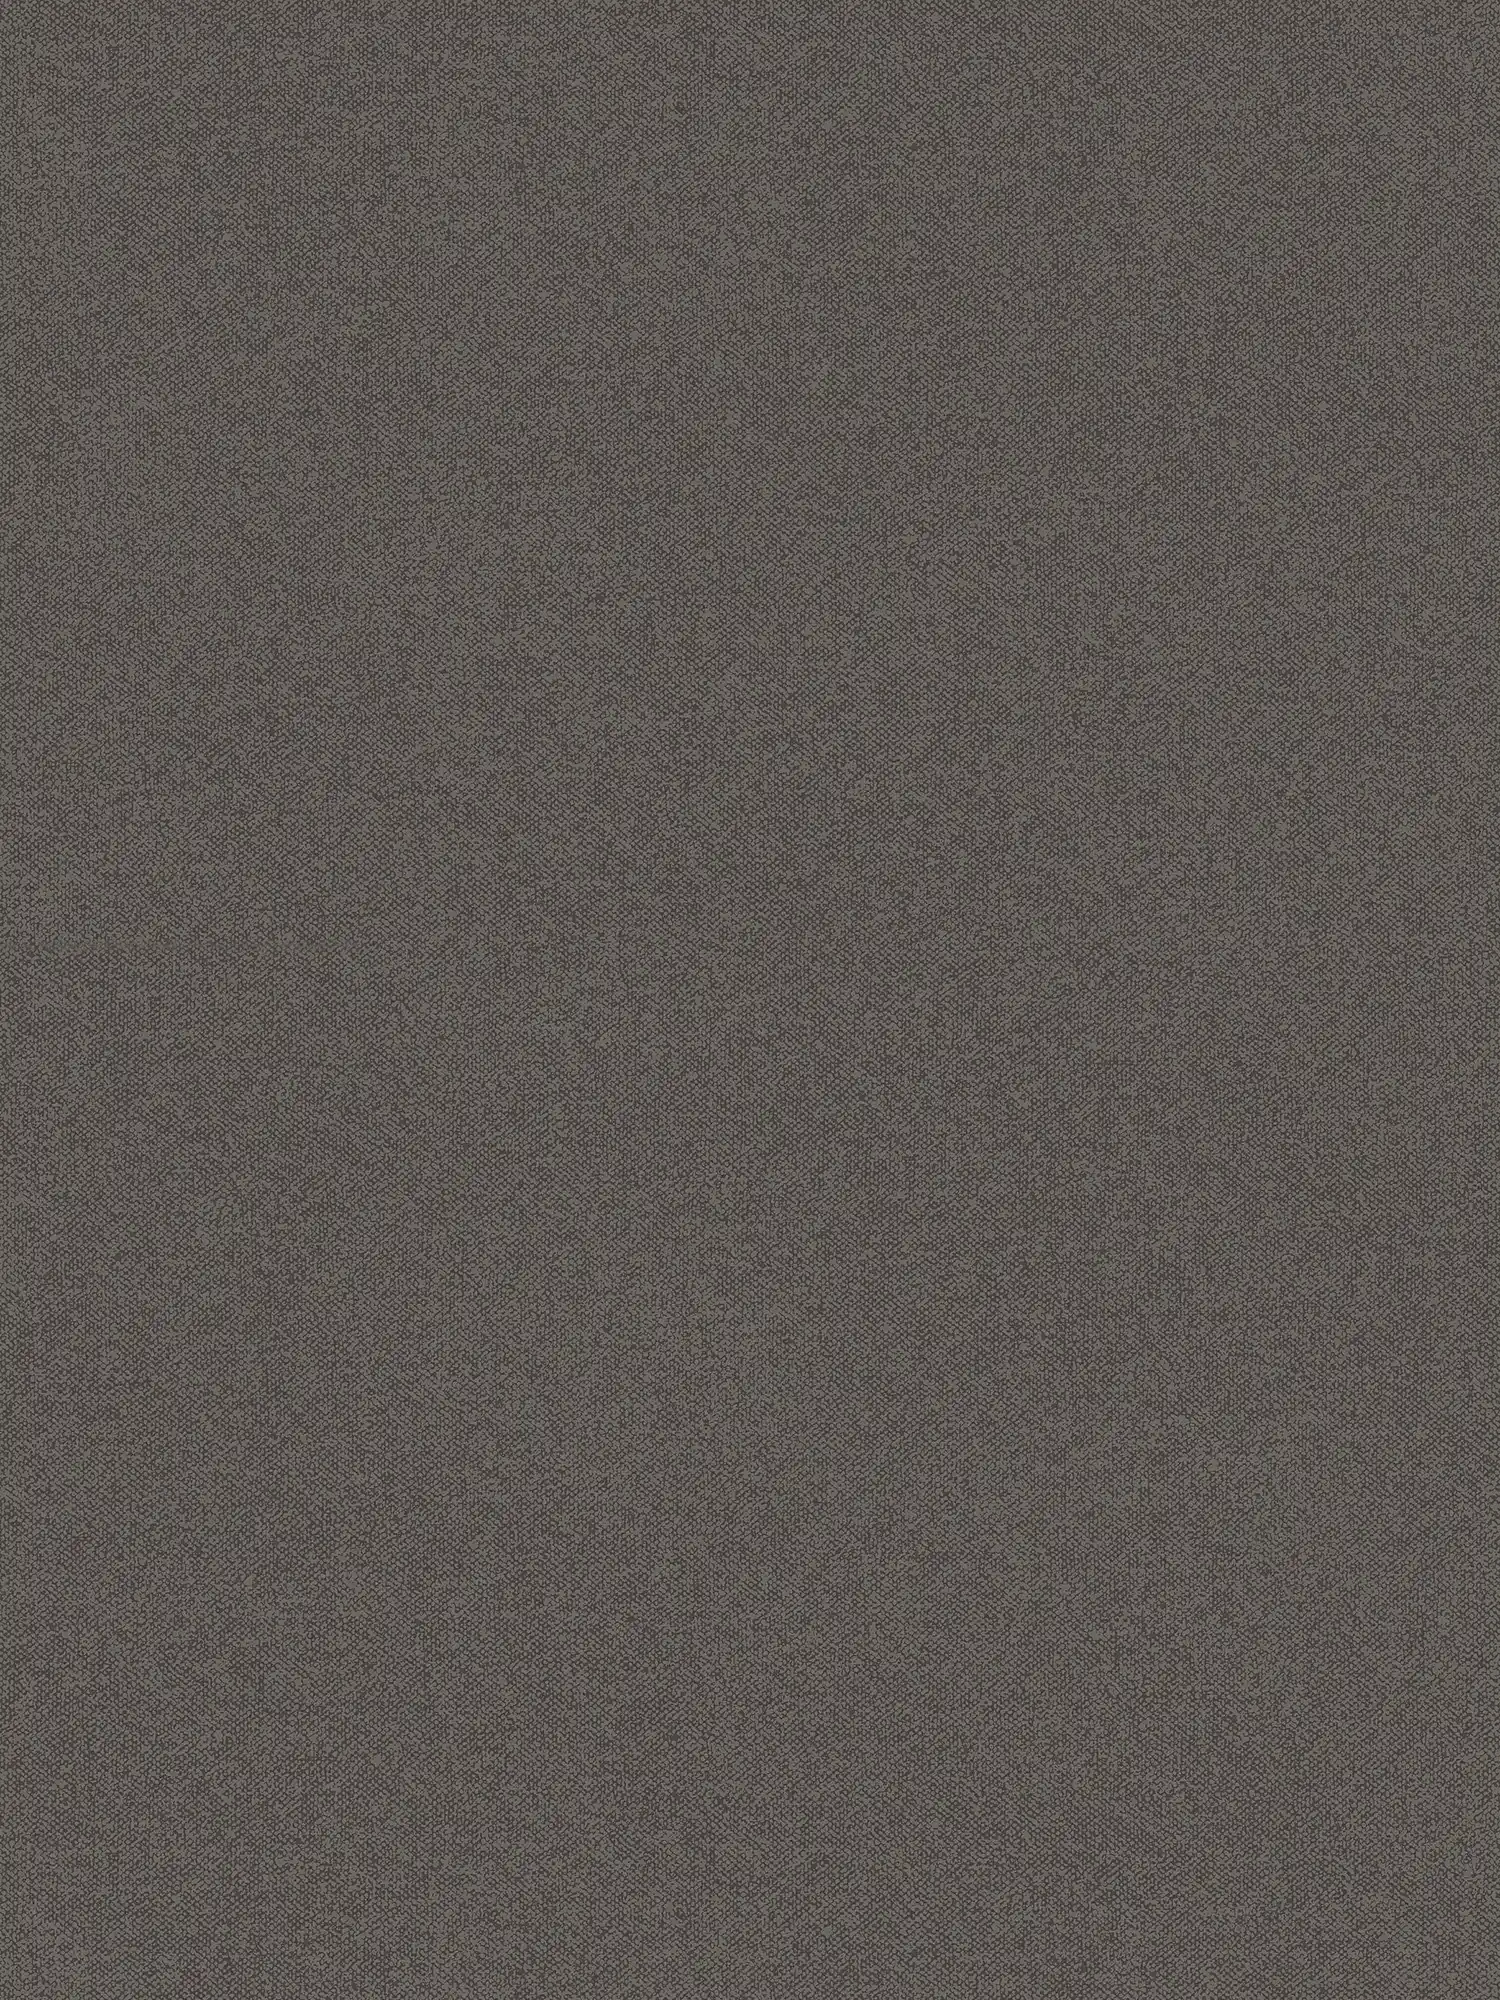 Plain wallpaper with linen look - brown, black
